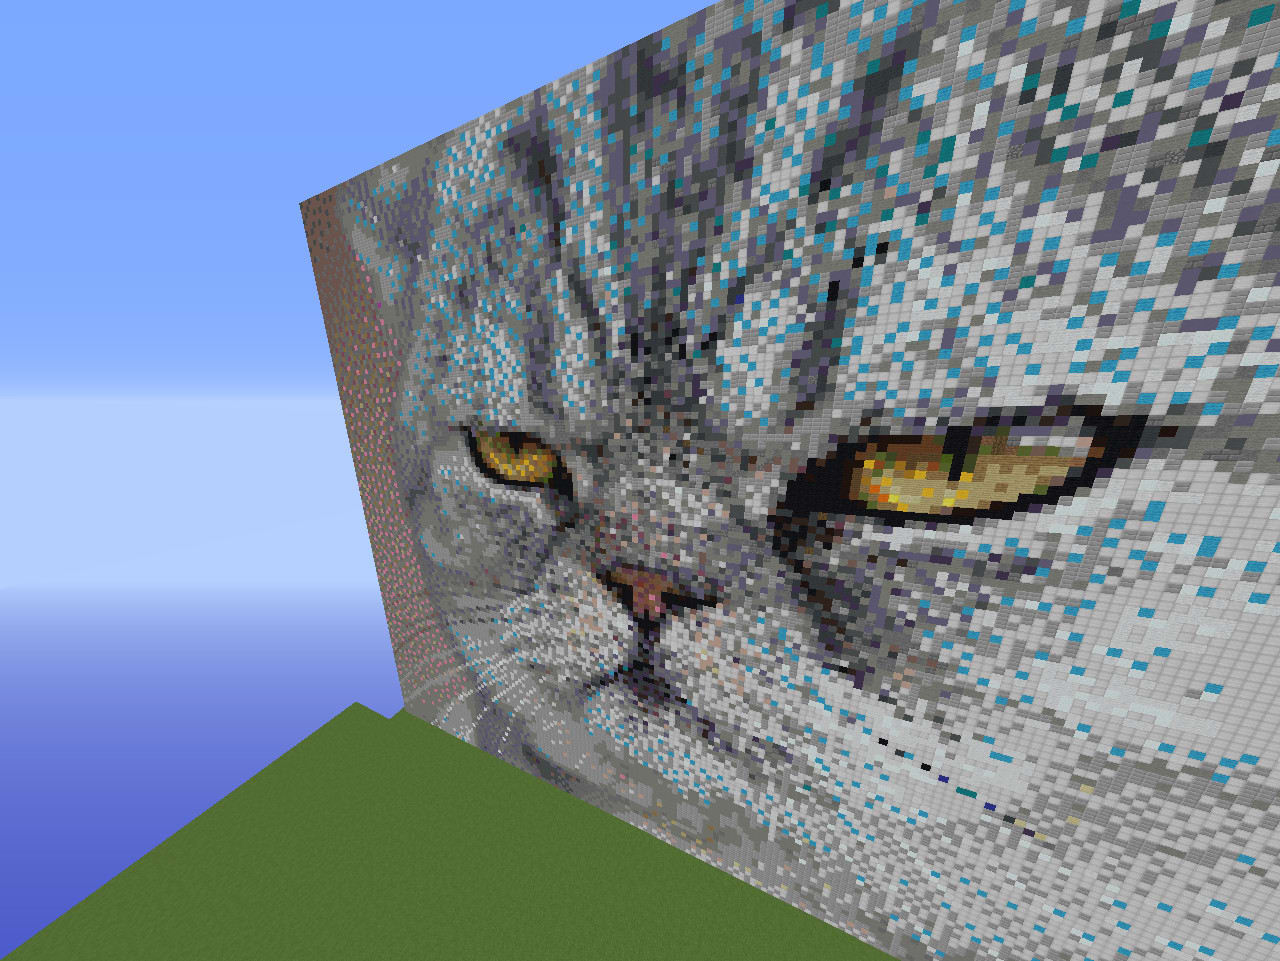 Build Your Image As Pixel Art In Minecraft By Jaydenlitolff Fiverr